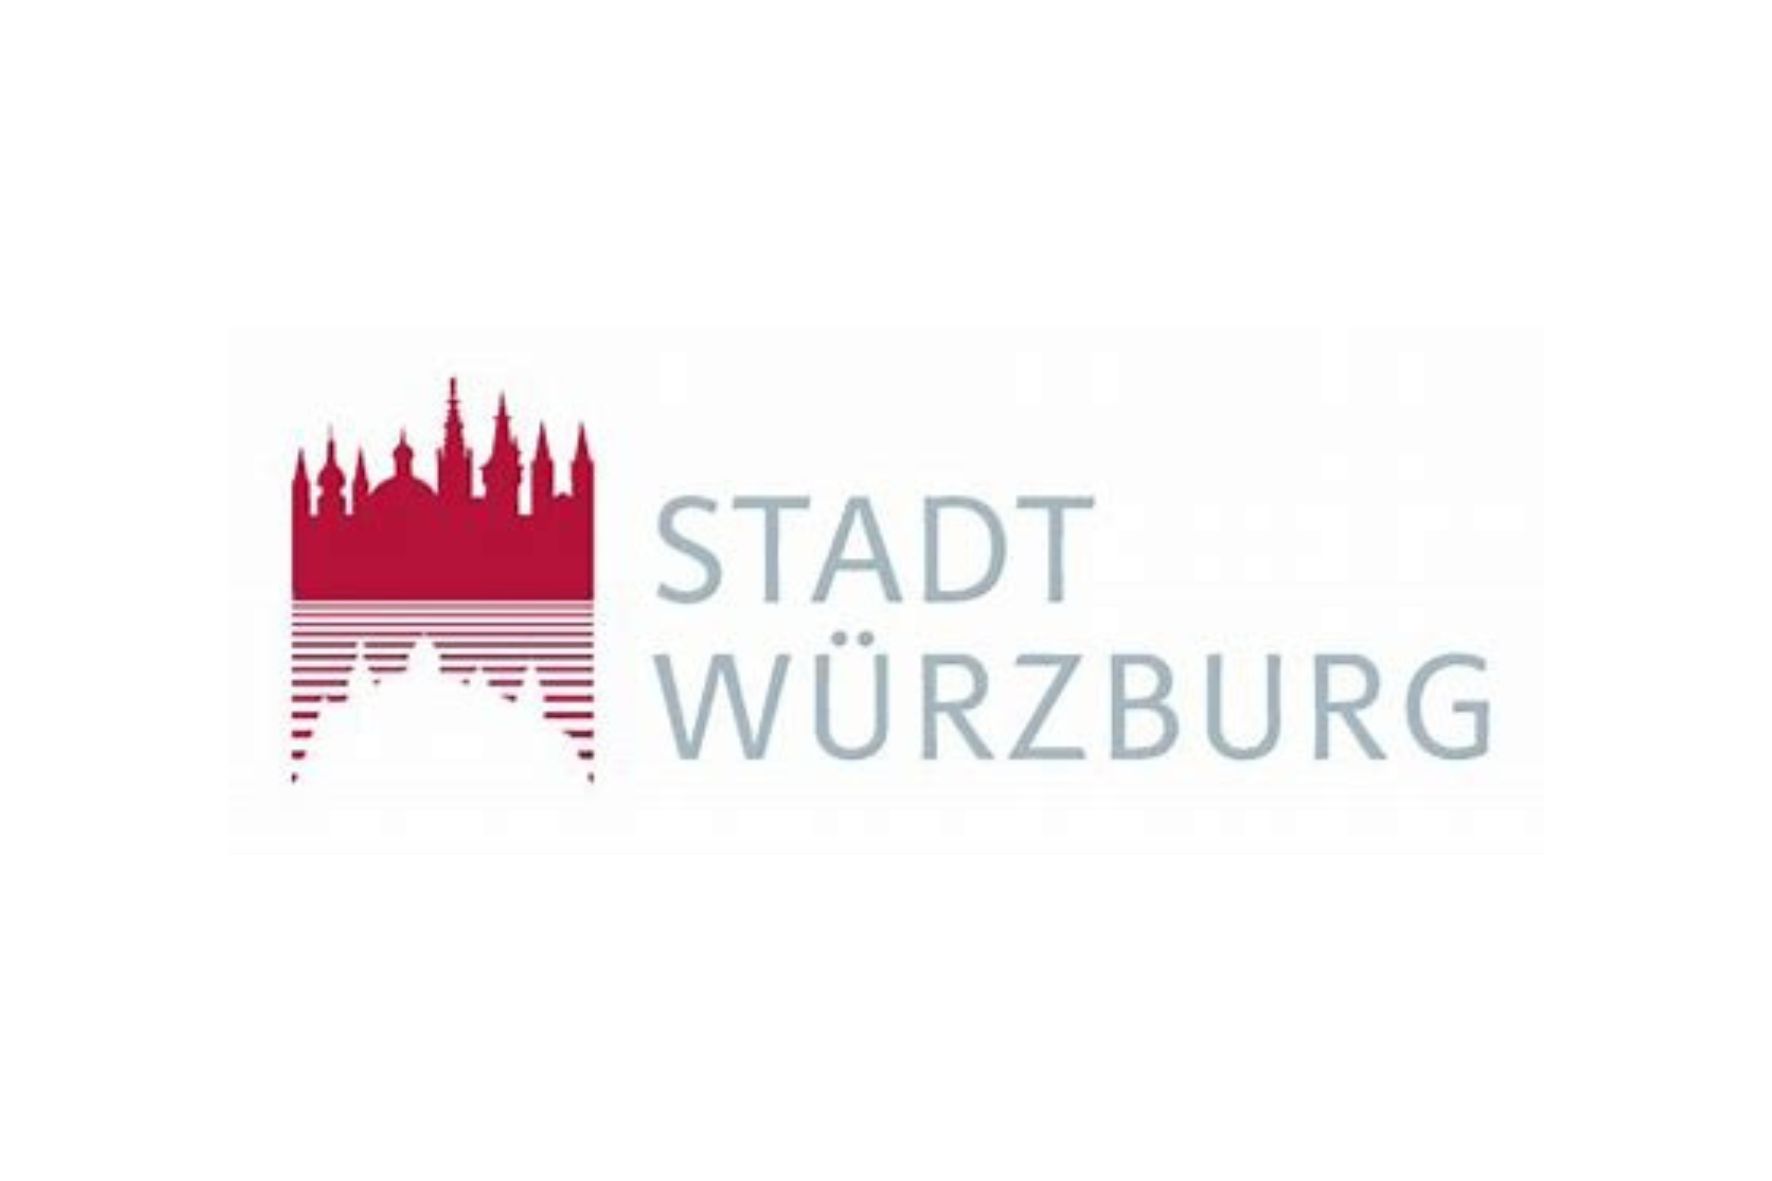 Logos-Referenzen-Bunt  Stadtwerke(15 × 10 cm) (15 × 10 cm) (15 × 10 cm) (15 × 10 cm) (15 × 10 cm)